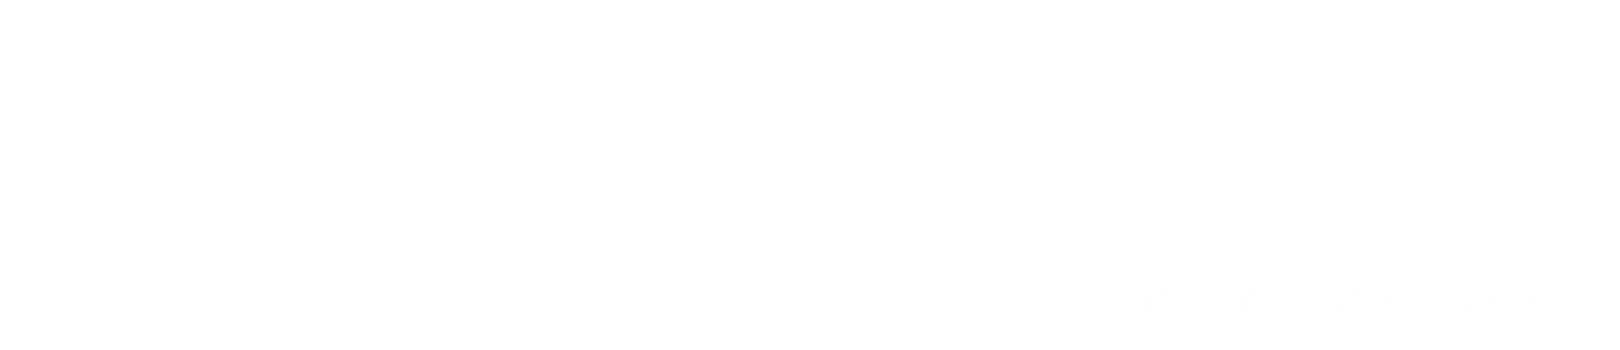 shsglobal logo